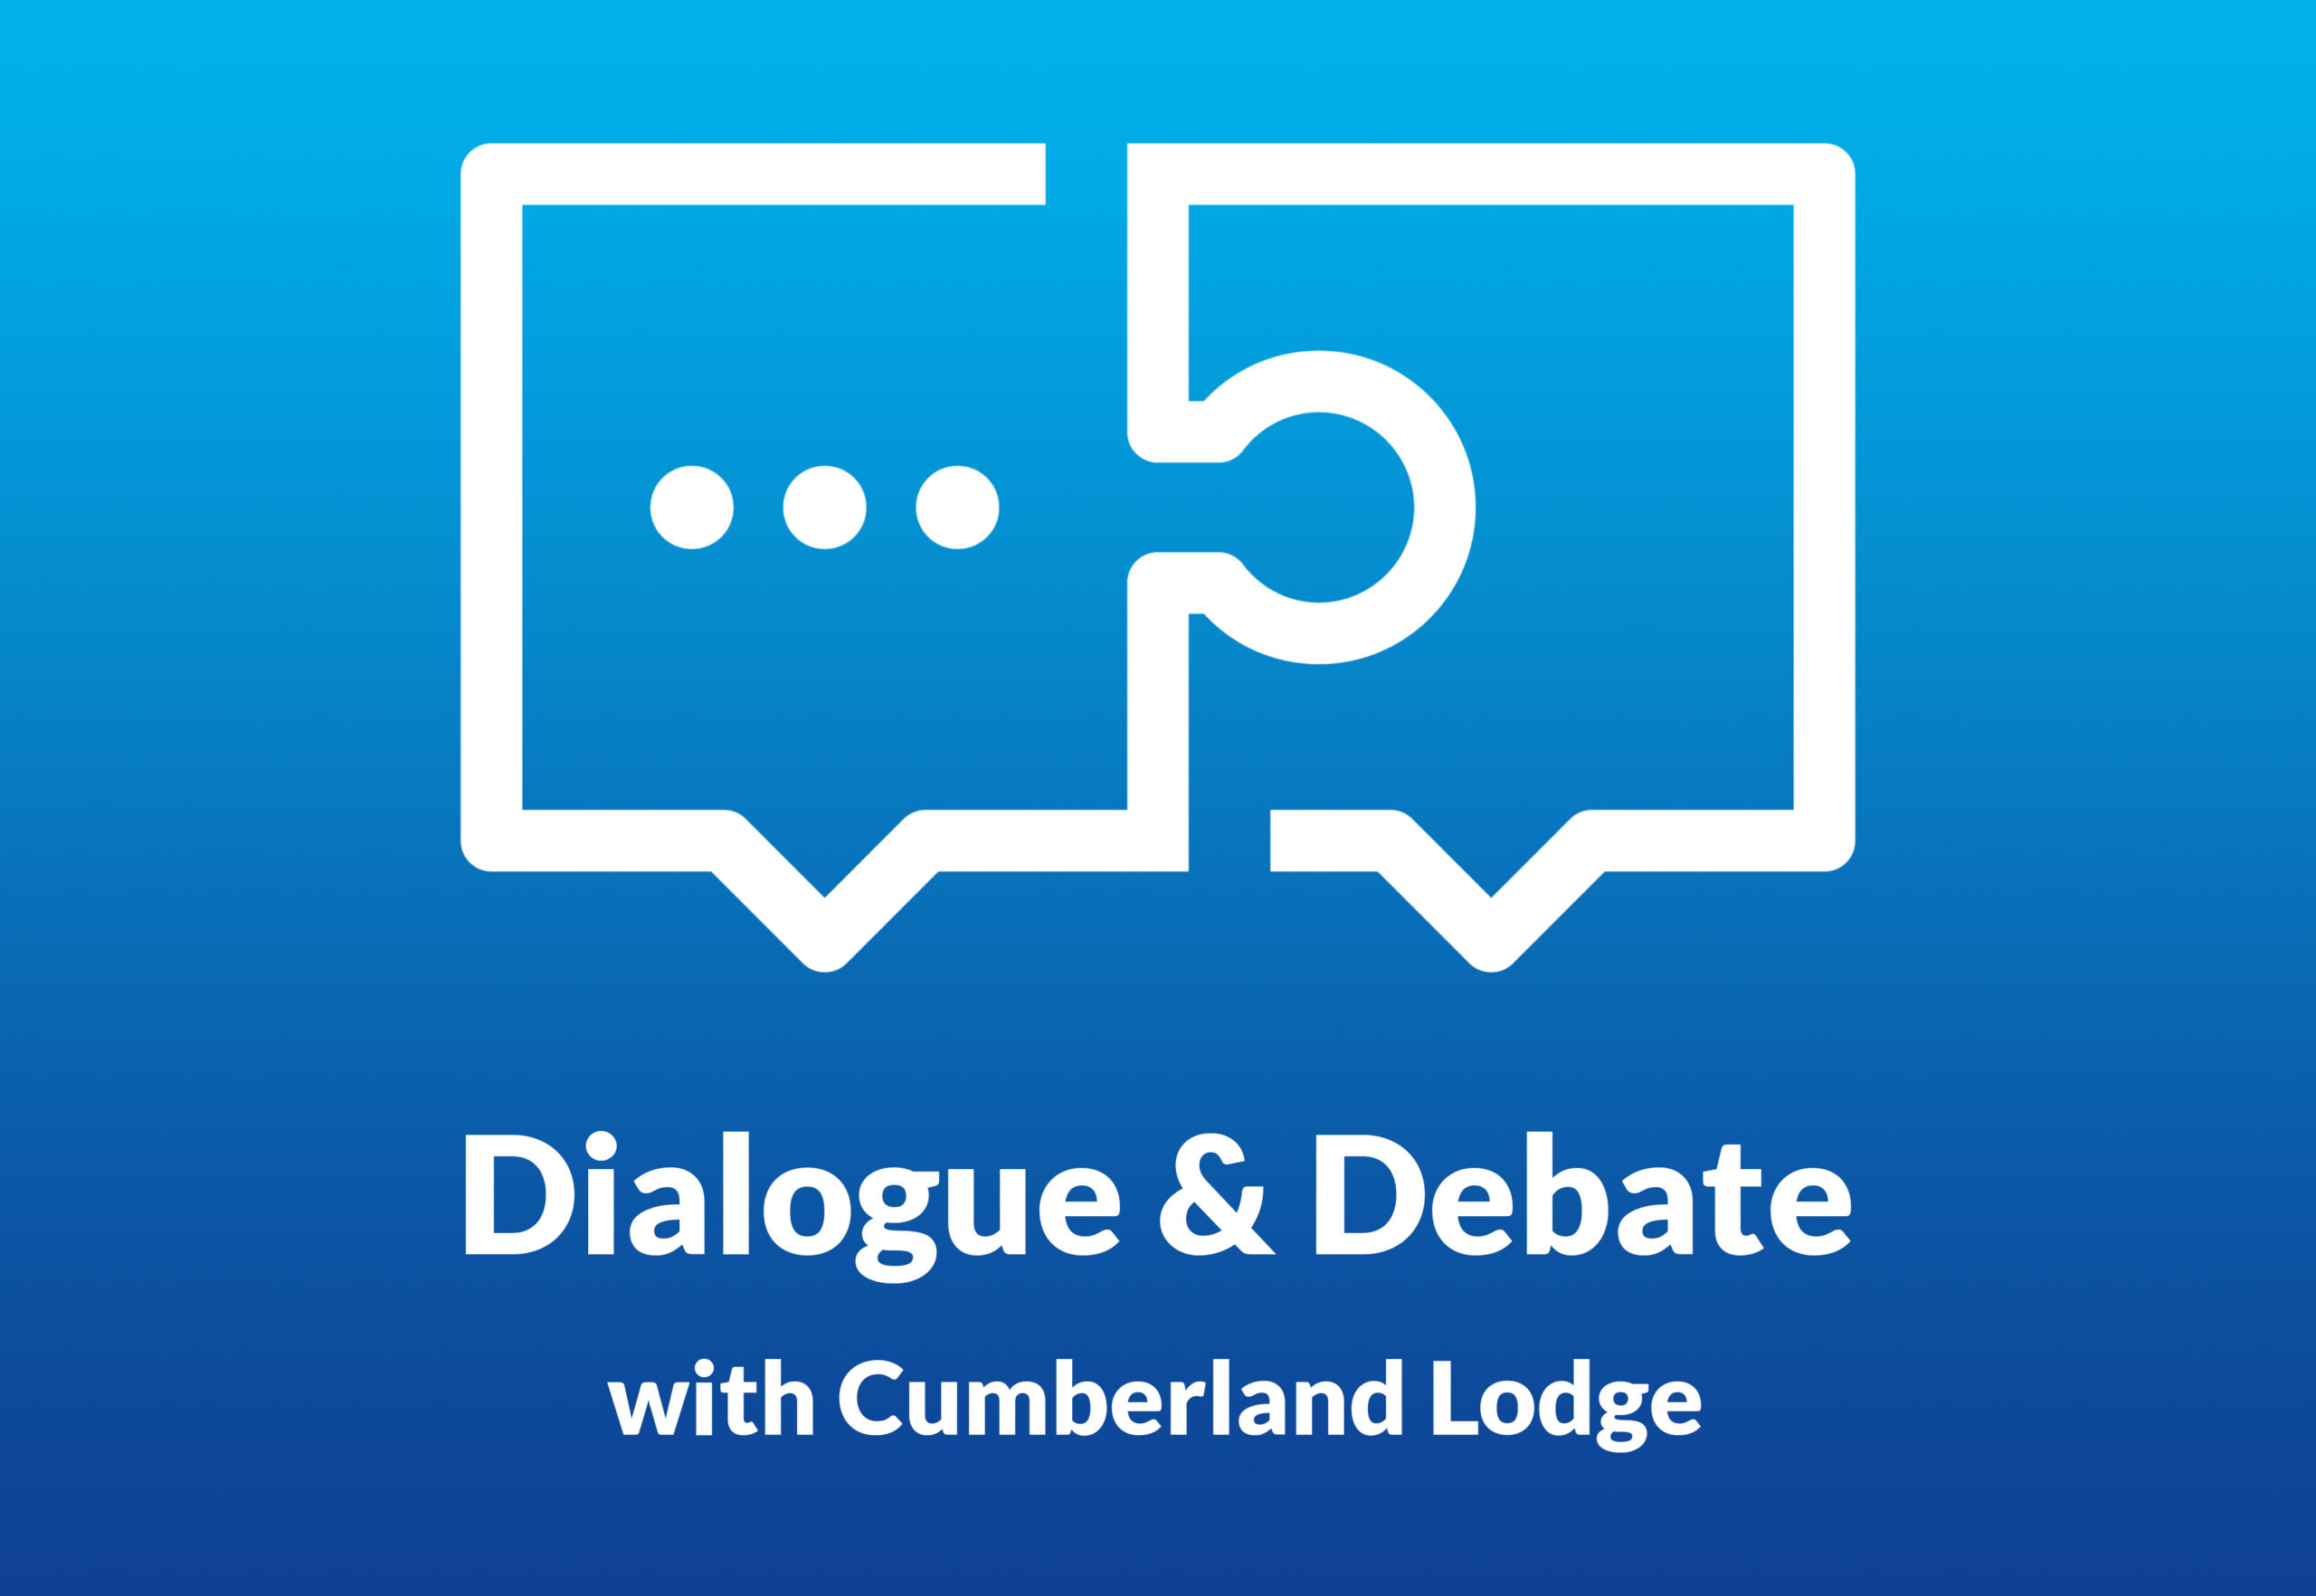 Dialogue & Debate webinar logo from Cumberland Lodge